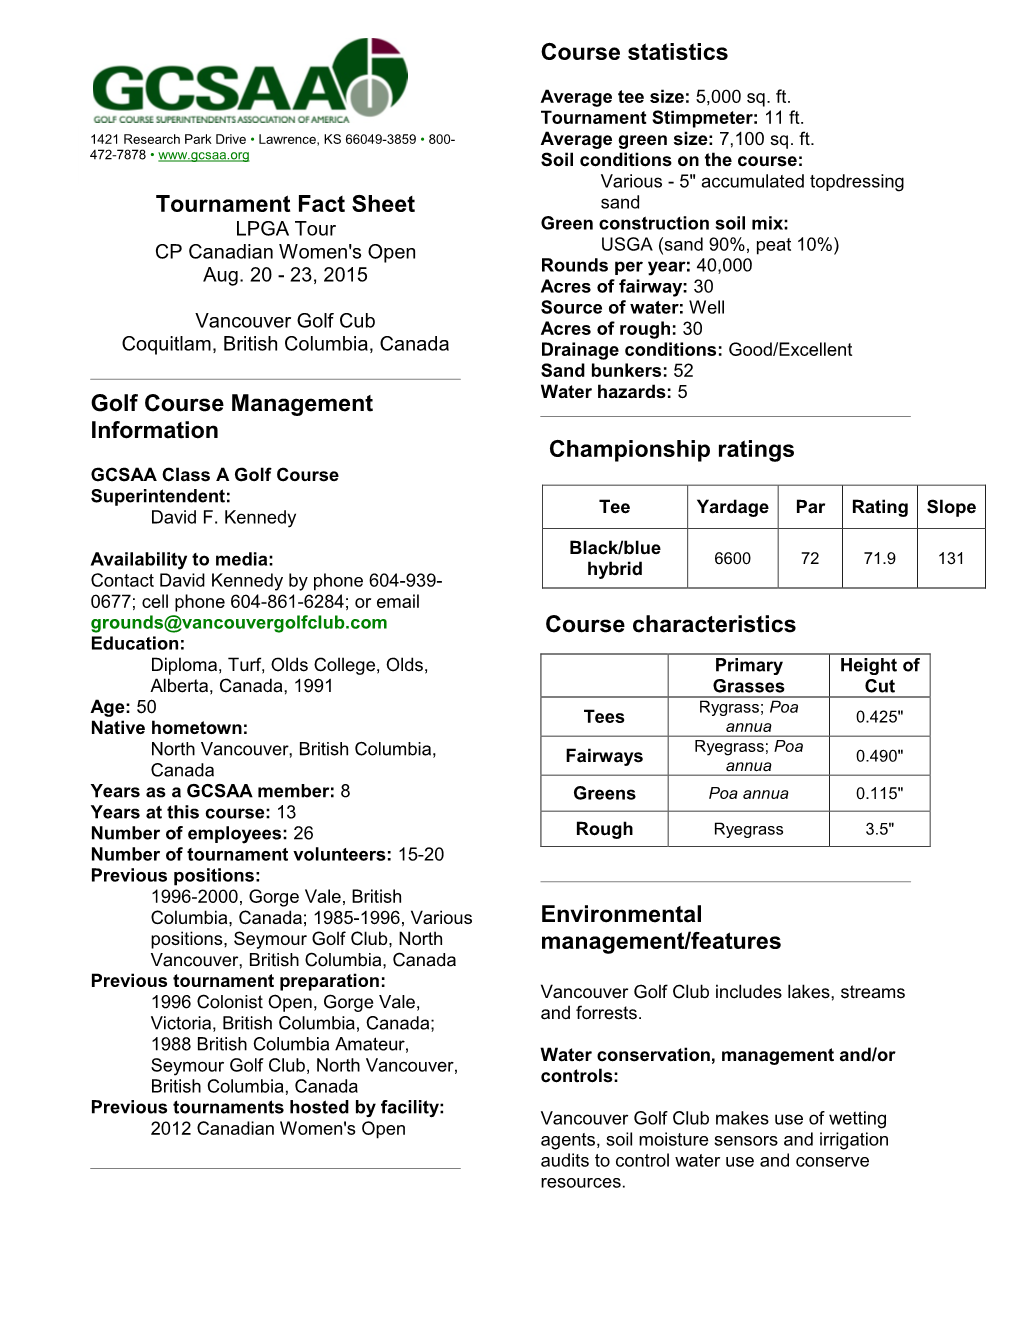 Tournament Fact Sheet Golf Course Management Information Course